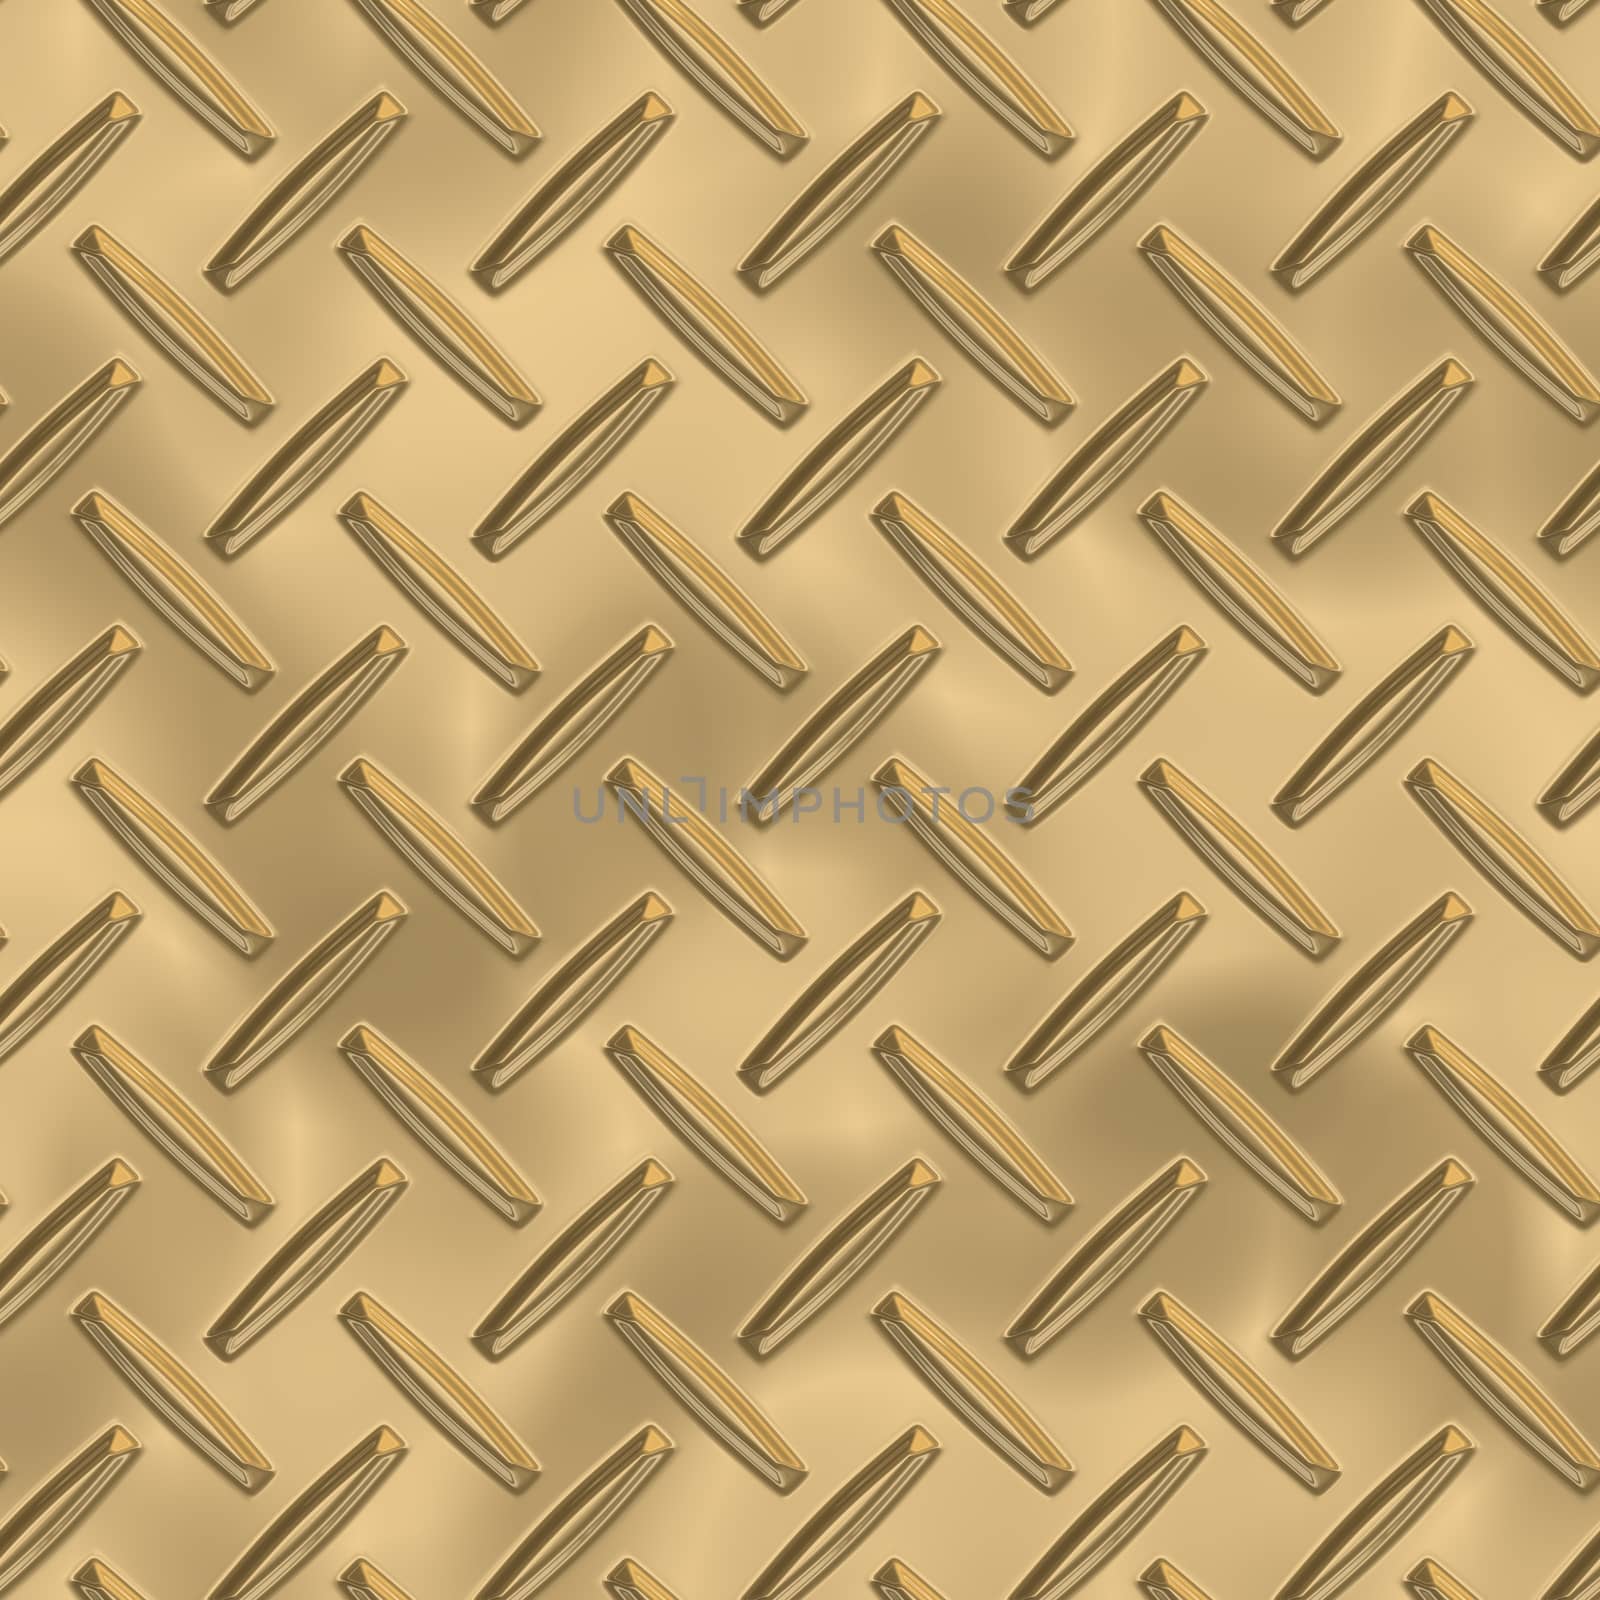 Yellow brass diamond shiny metal plate seamless pattern, or texture.